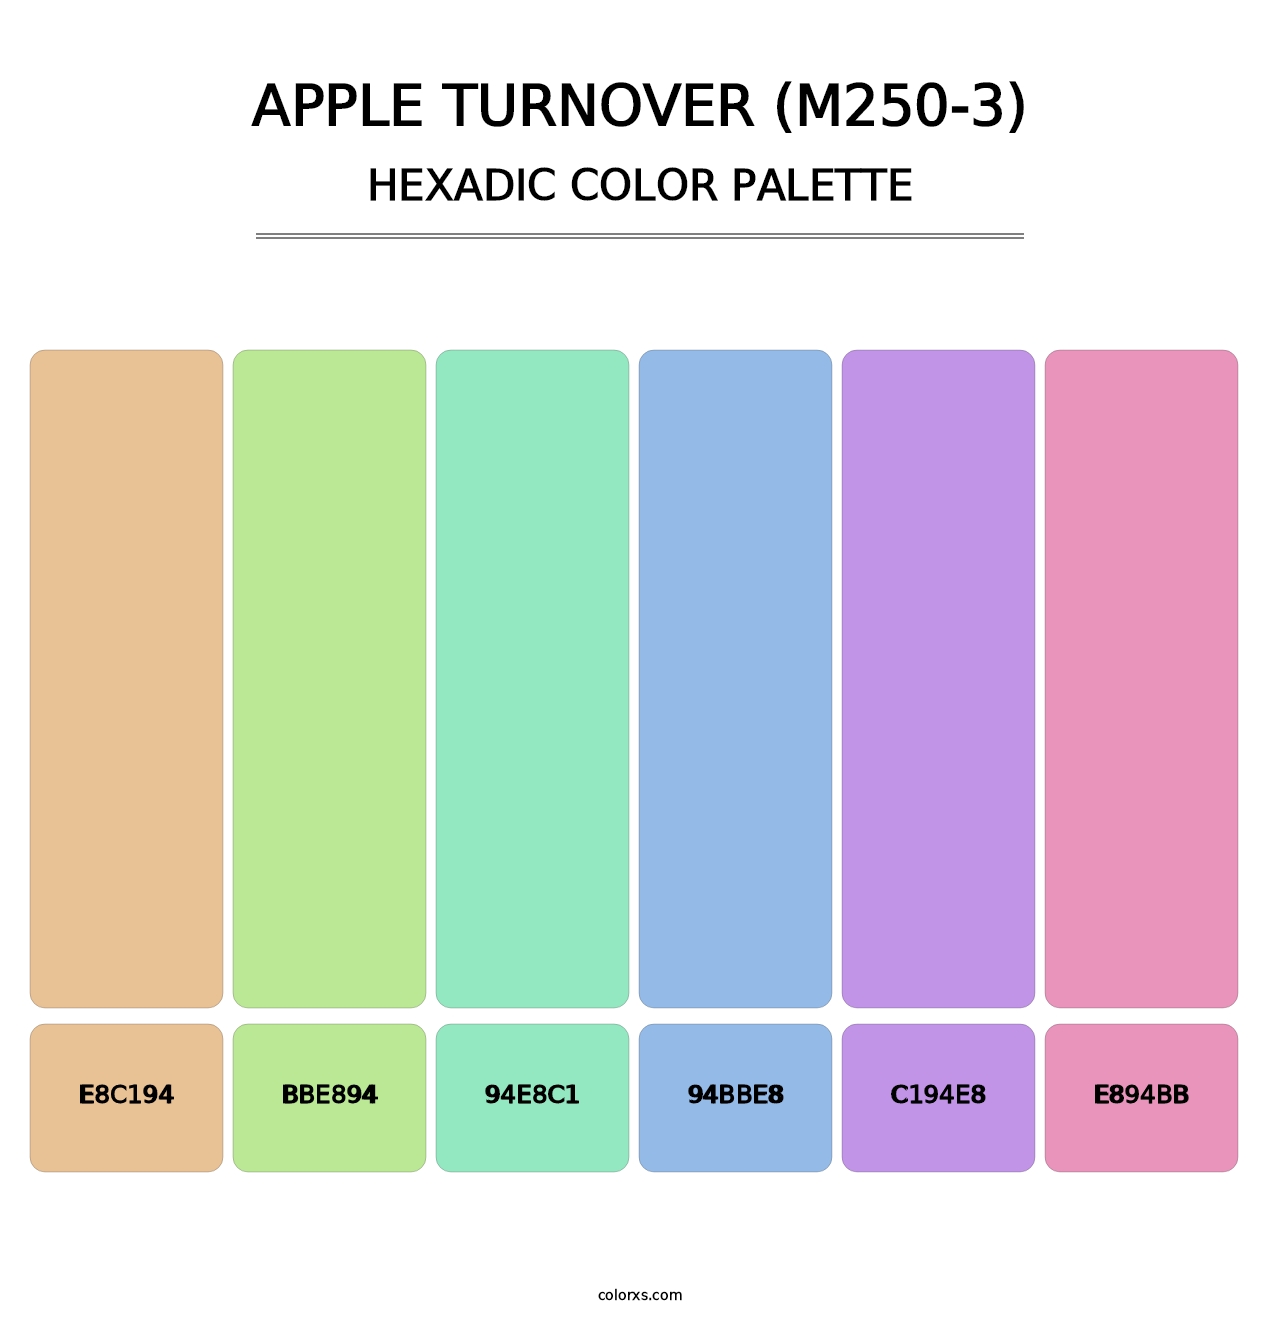 Apple Turnover (M250-3) - Hexadic Color Palette